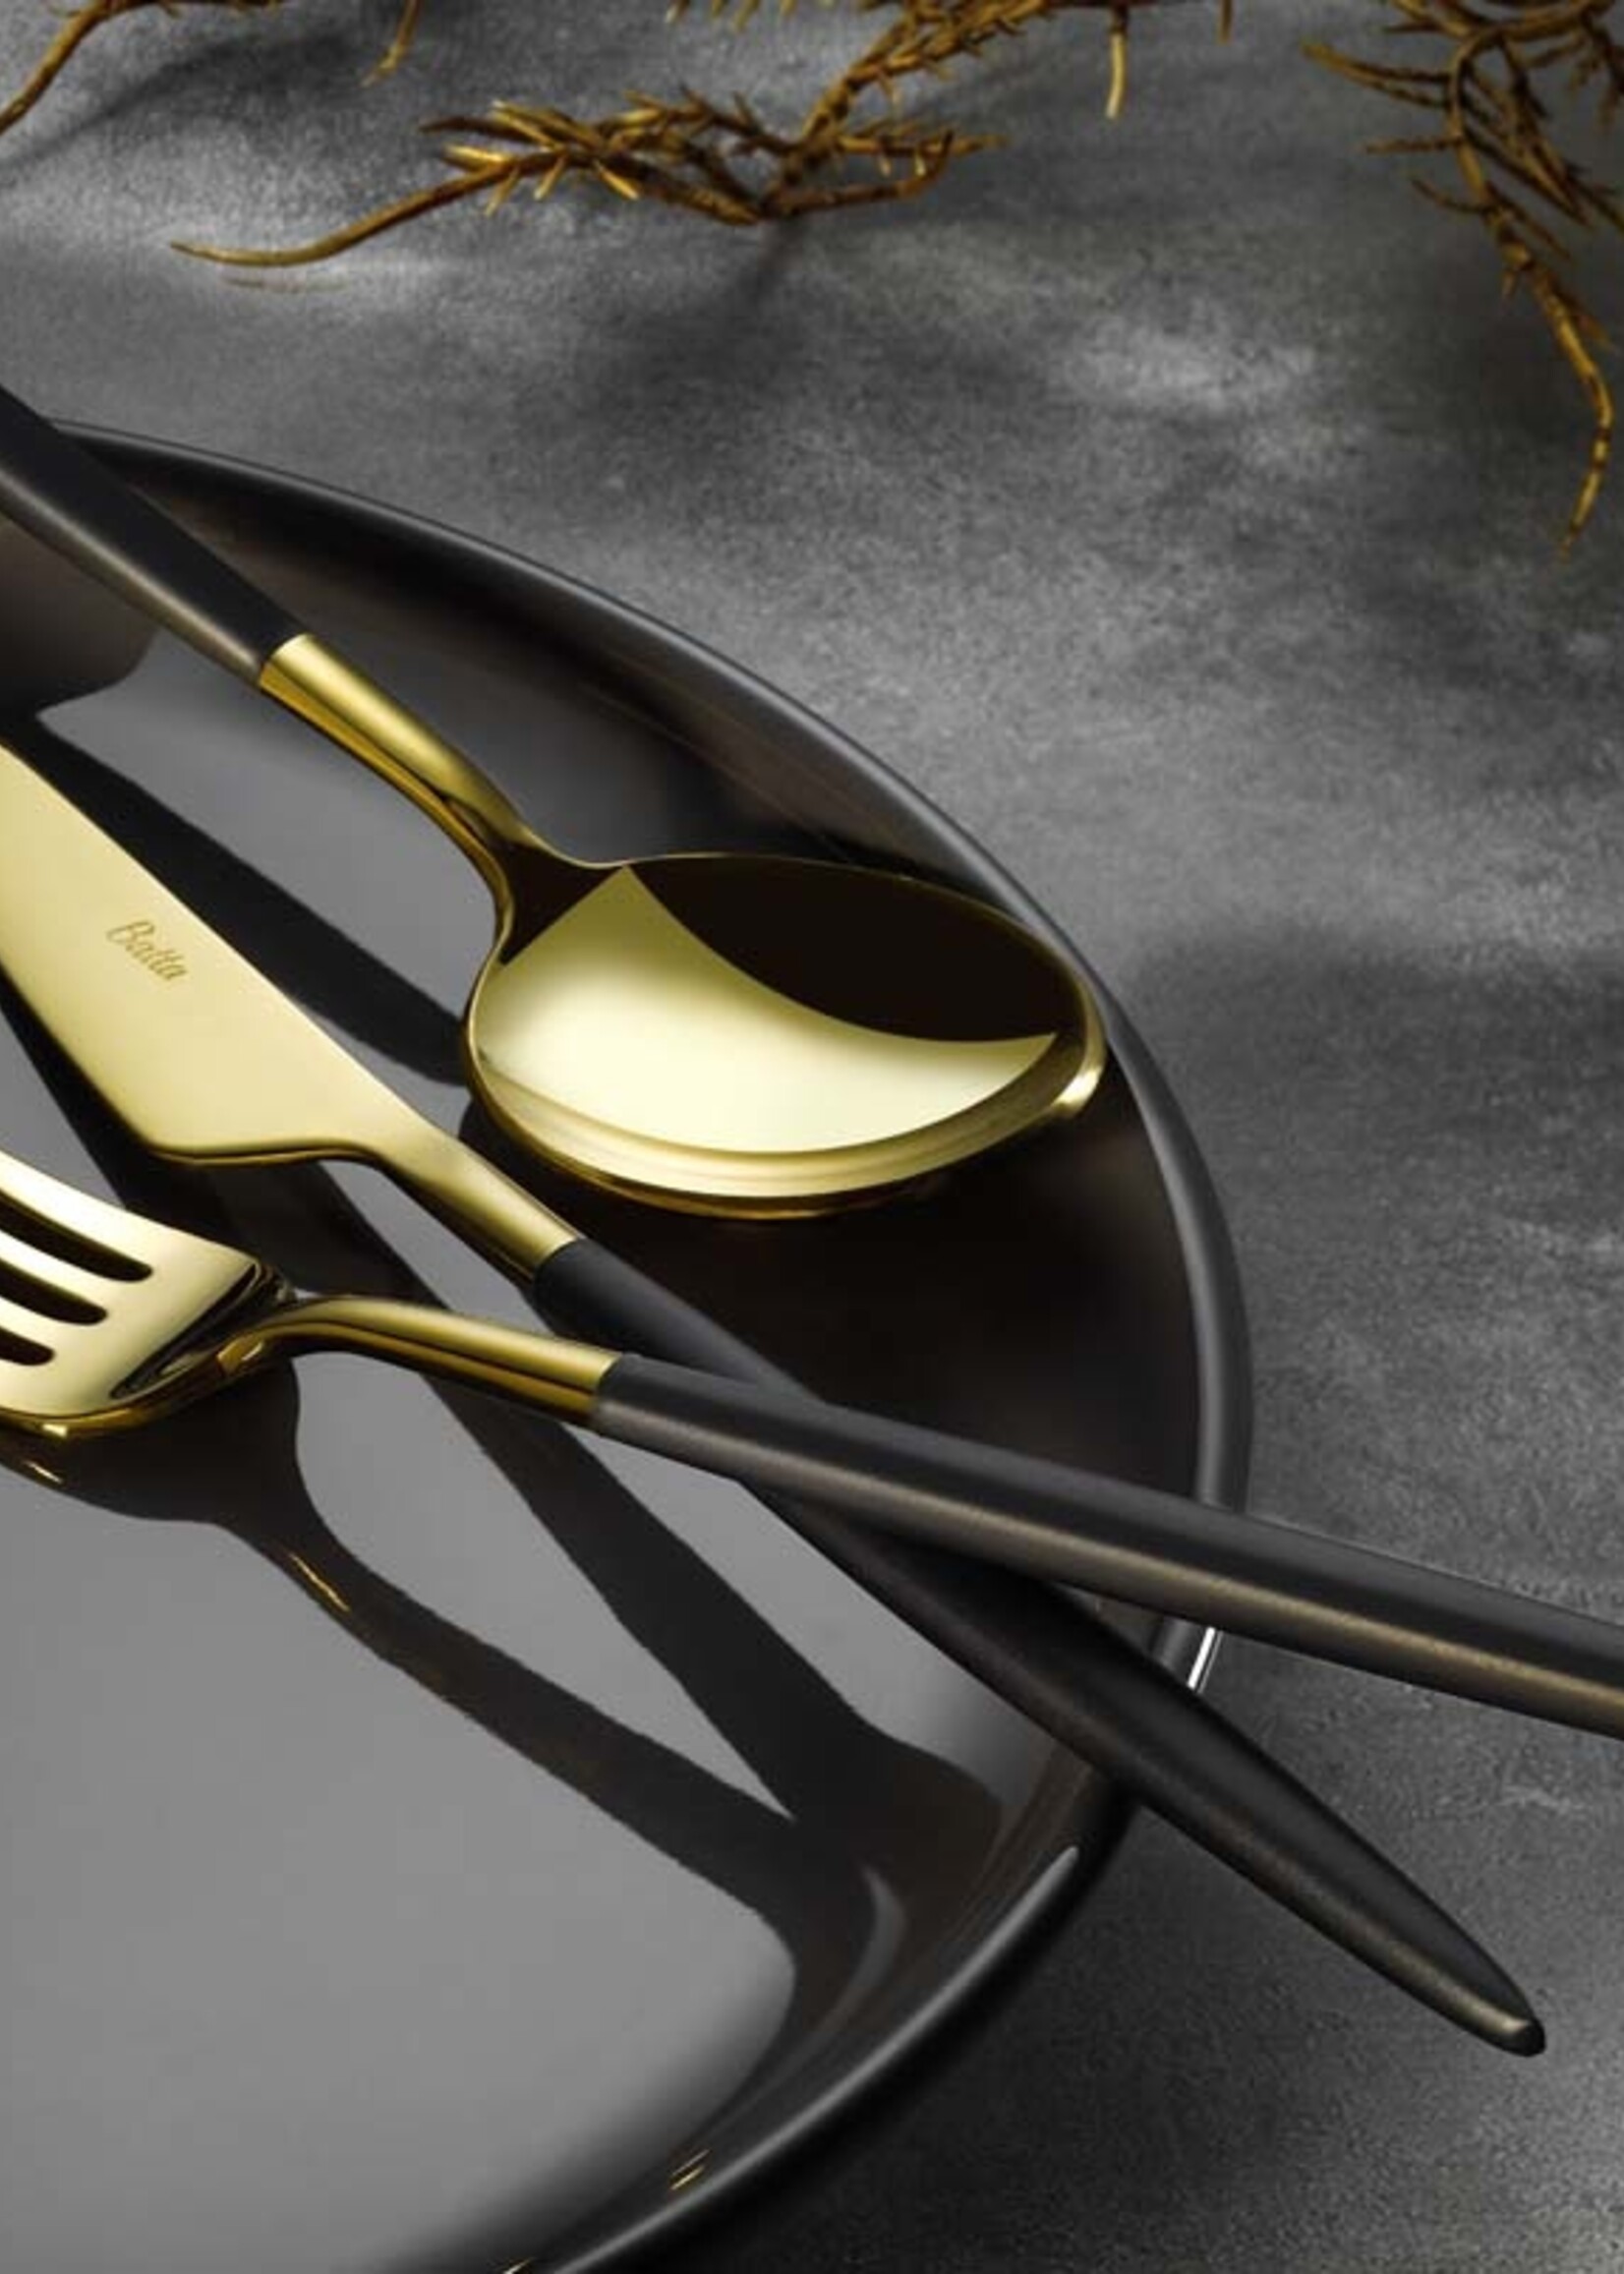 Batta Table Spoon - Stainless Steel – Washabi Black Gold - Batta